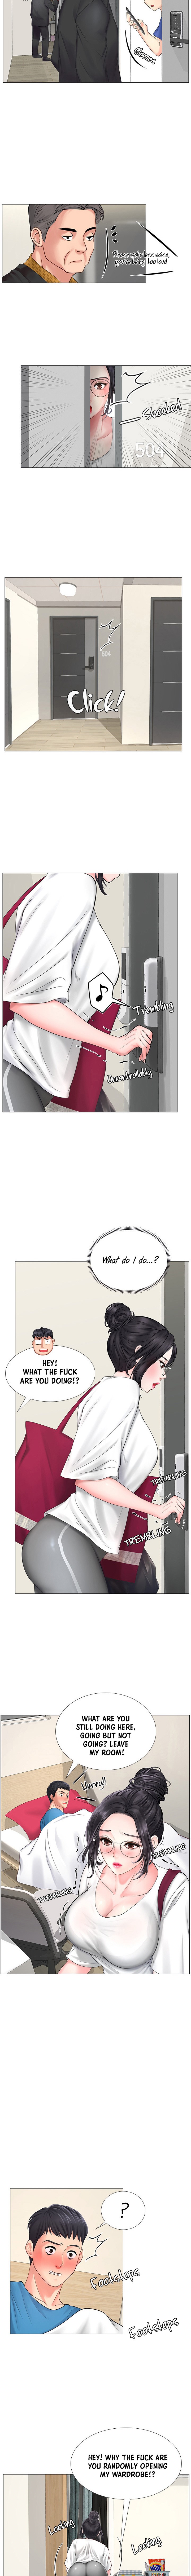 Should I Study at Noryangjin? - Chapter 8 Page 5